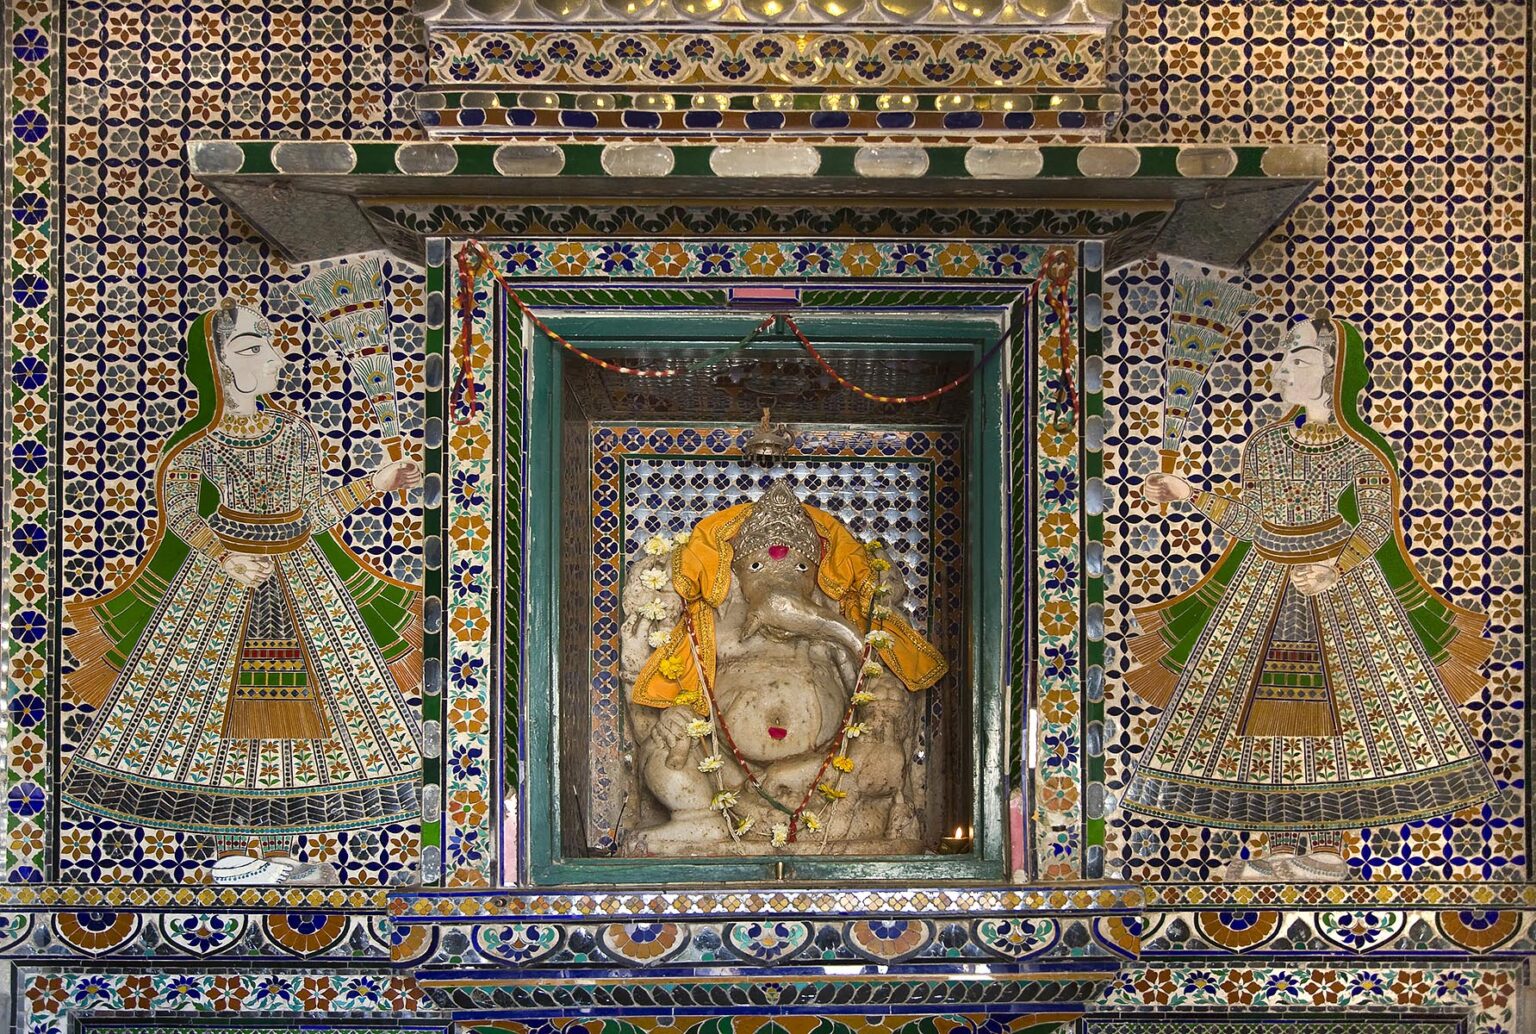 Sculpture of the elephant deity GANESHA inside the CITY PALACE of UDAIPUR - RAJASTHAN, INDIA